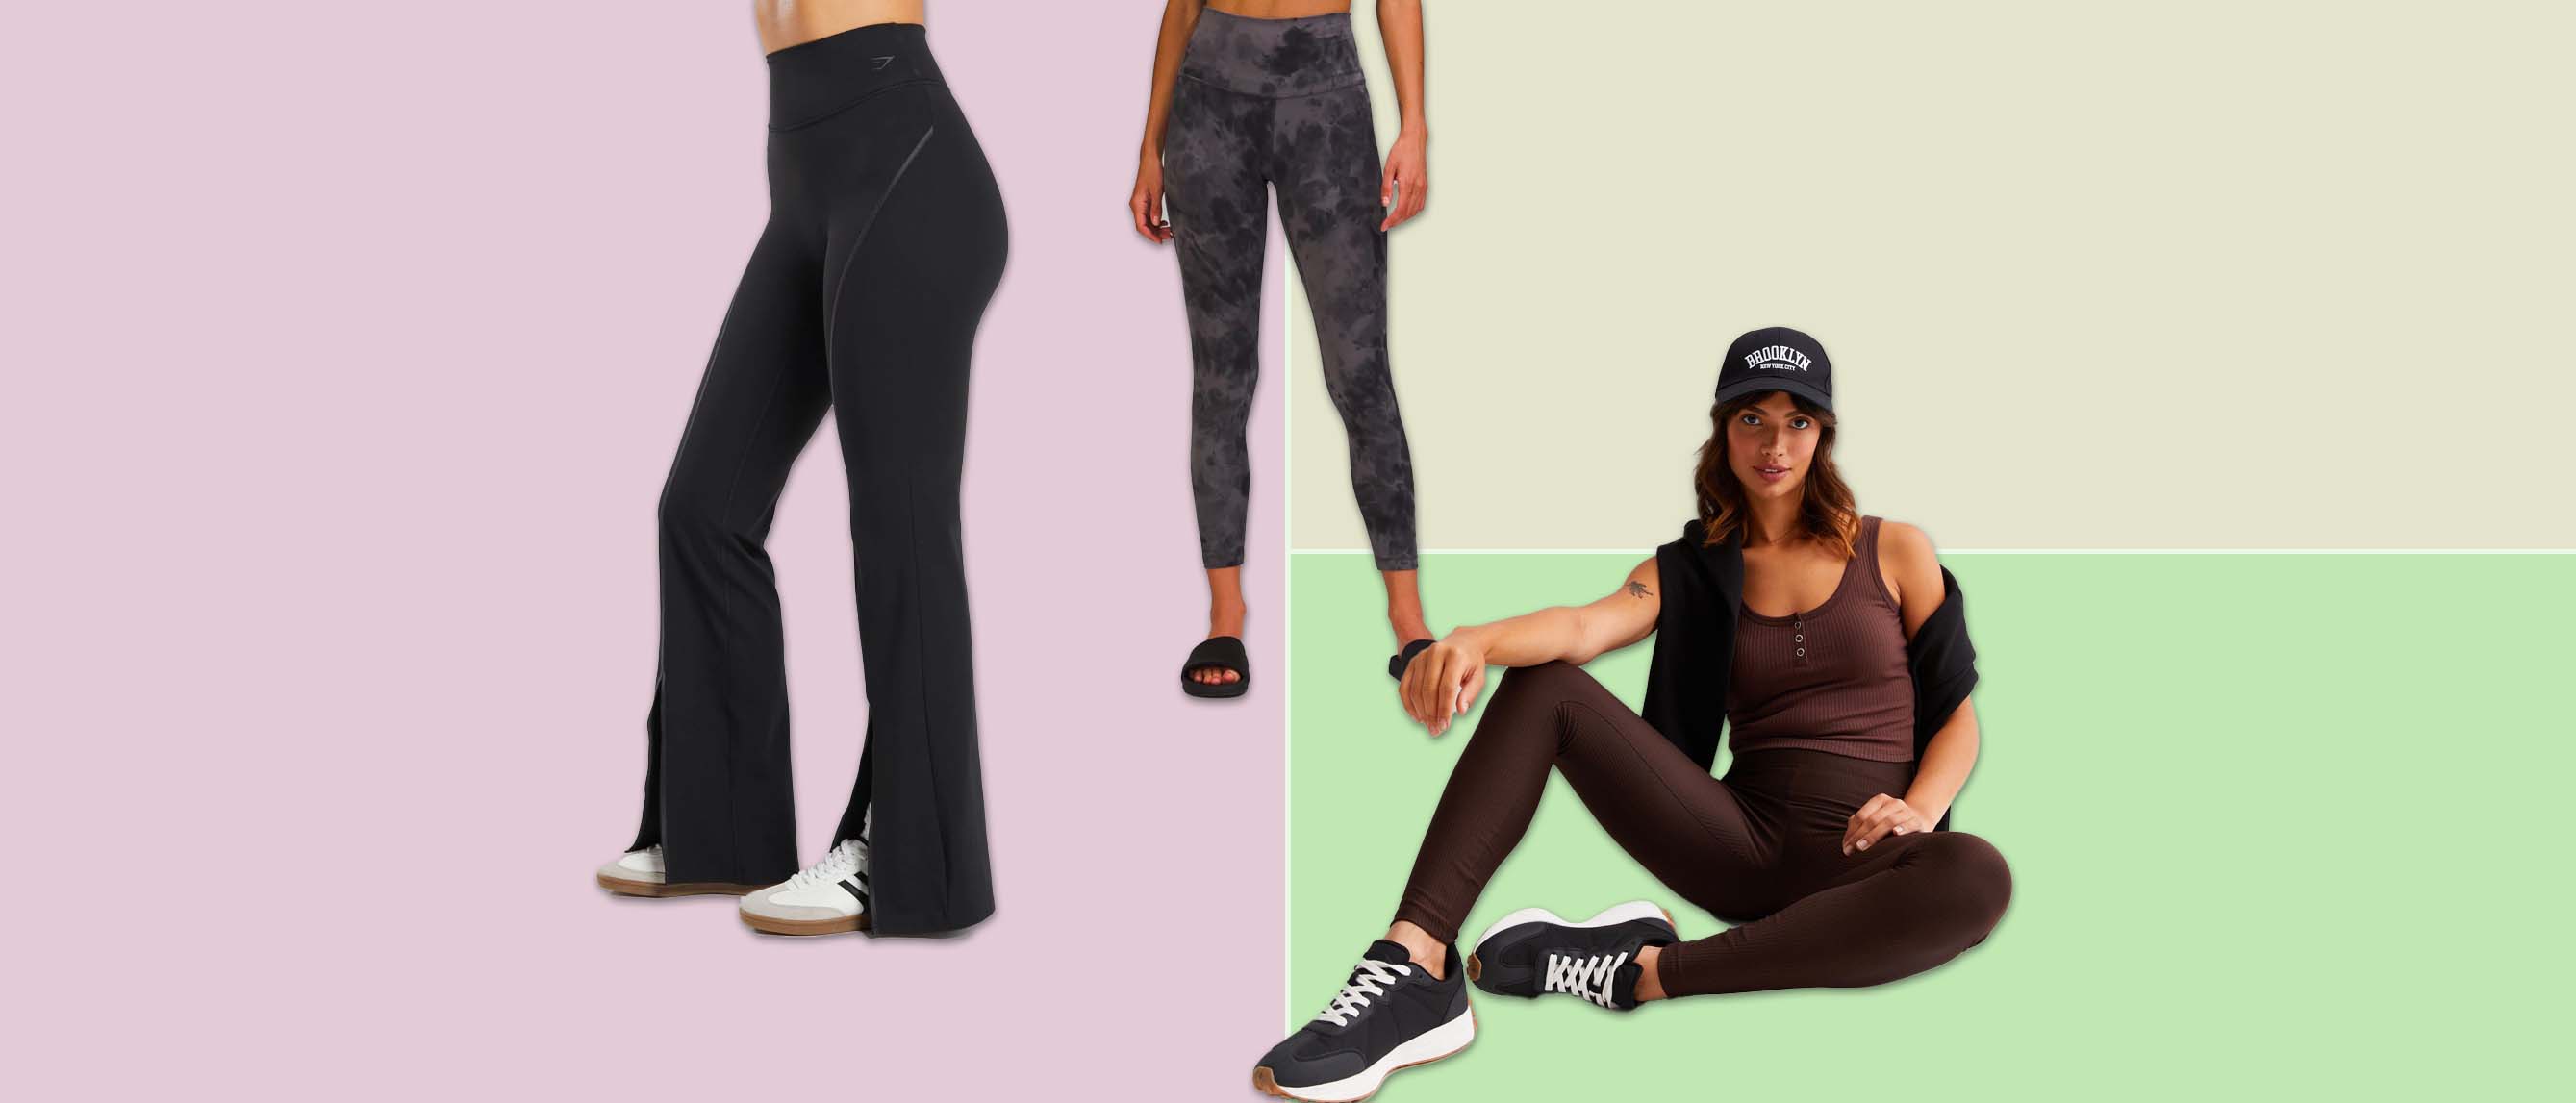 Women's Super Soft Midi-rise Printed Leggings Black One Size Fits